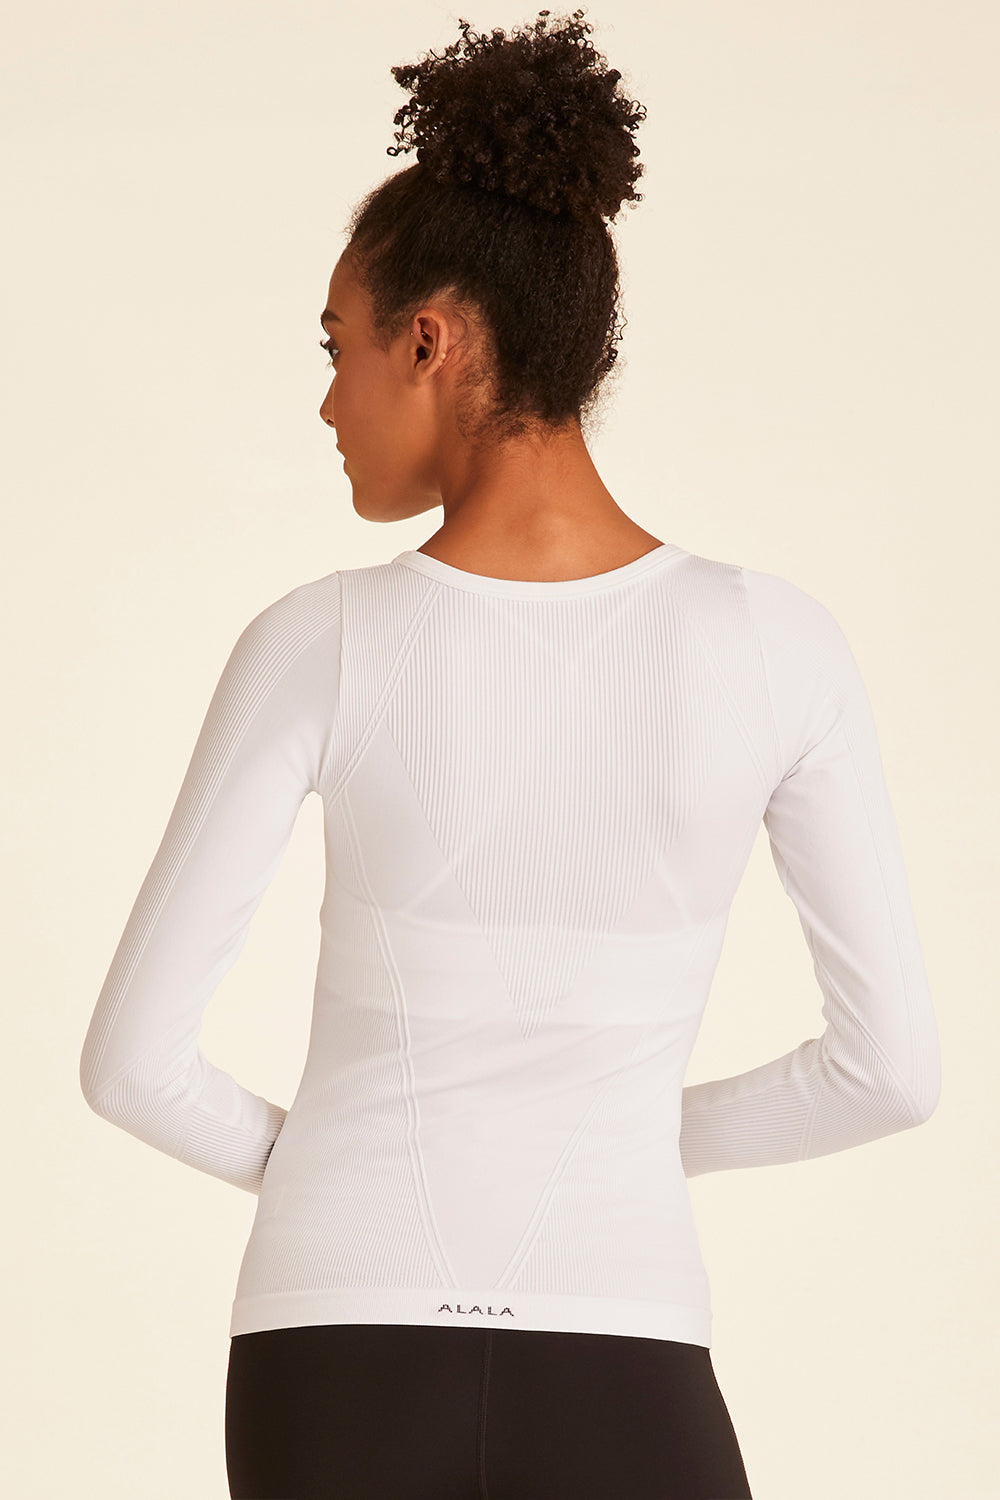 Alala Barre Seamless Long Sleeve in White